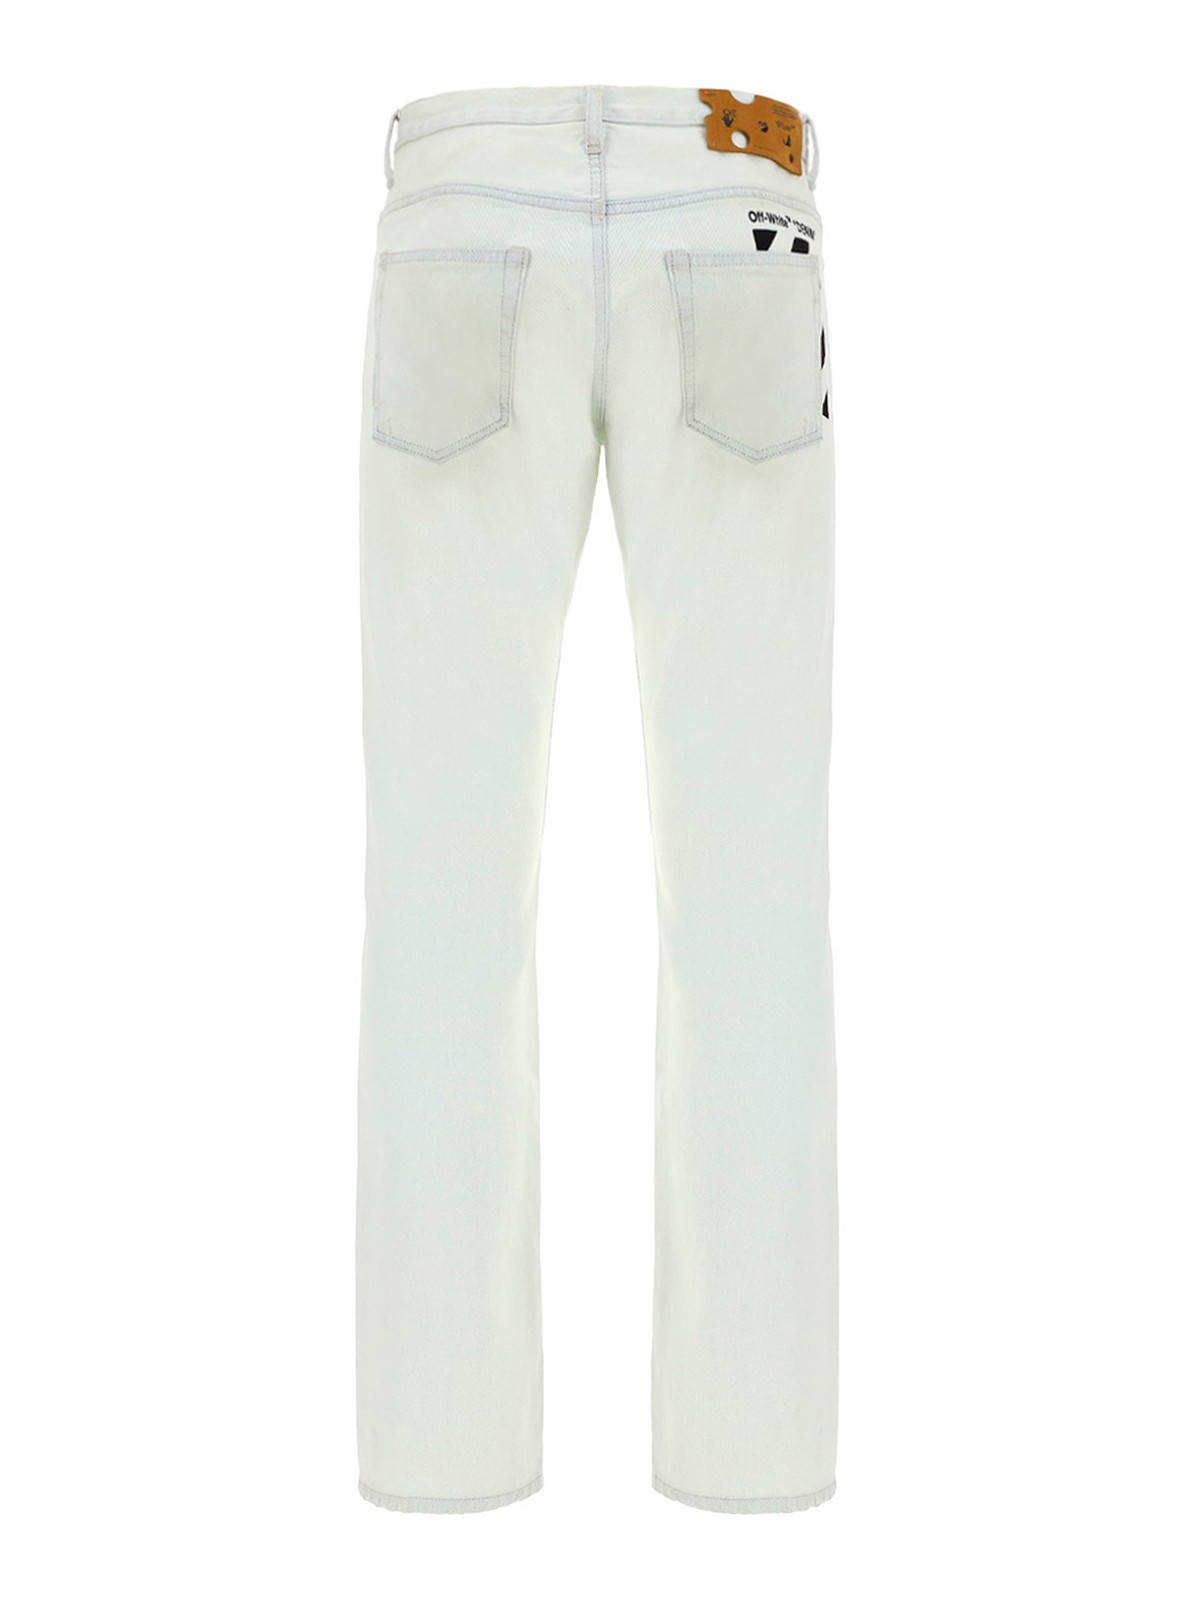 Dirty white denim jeans